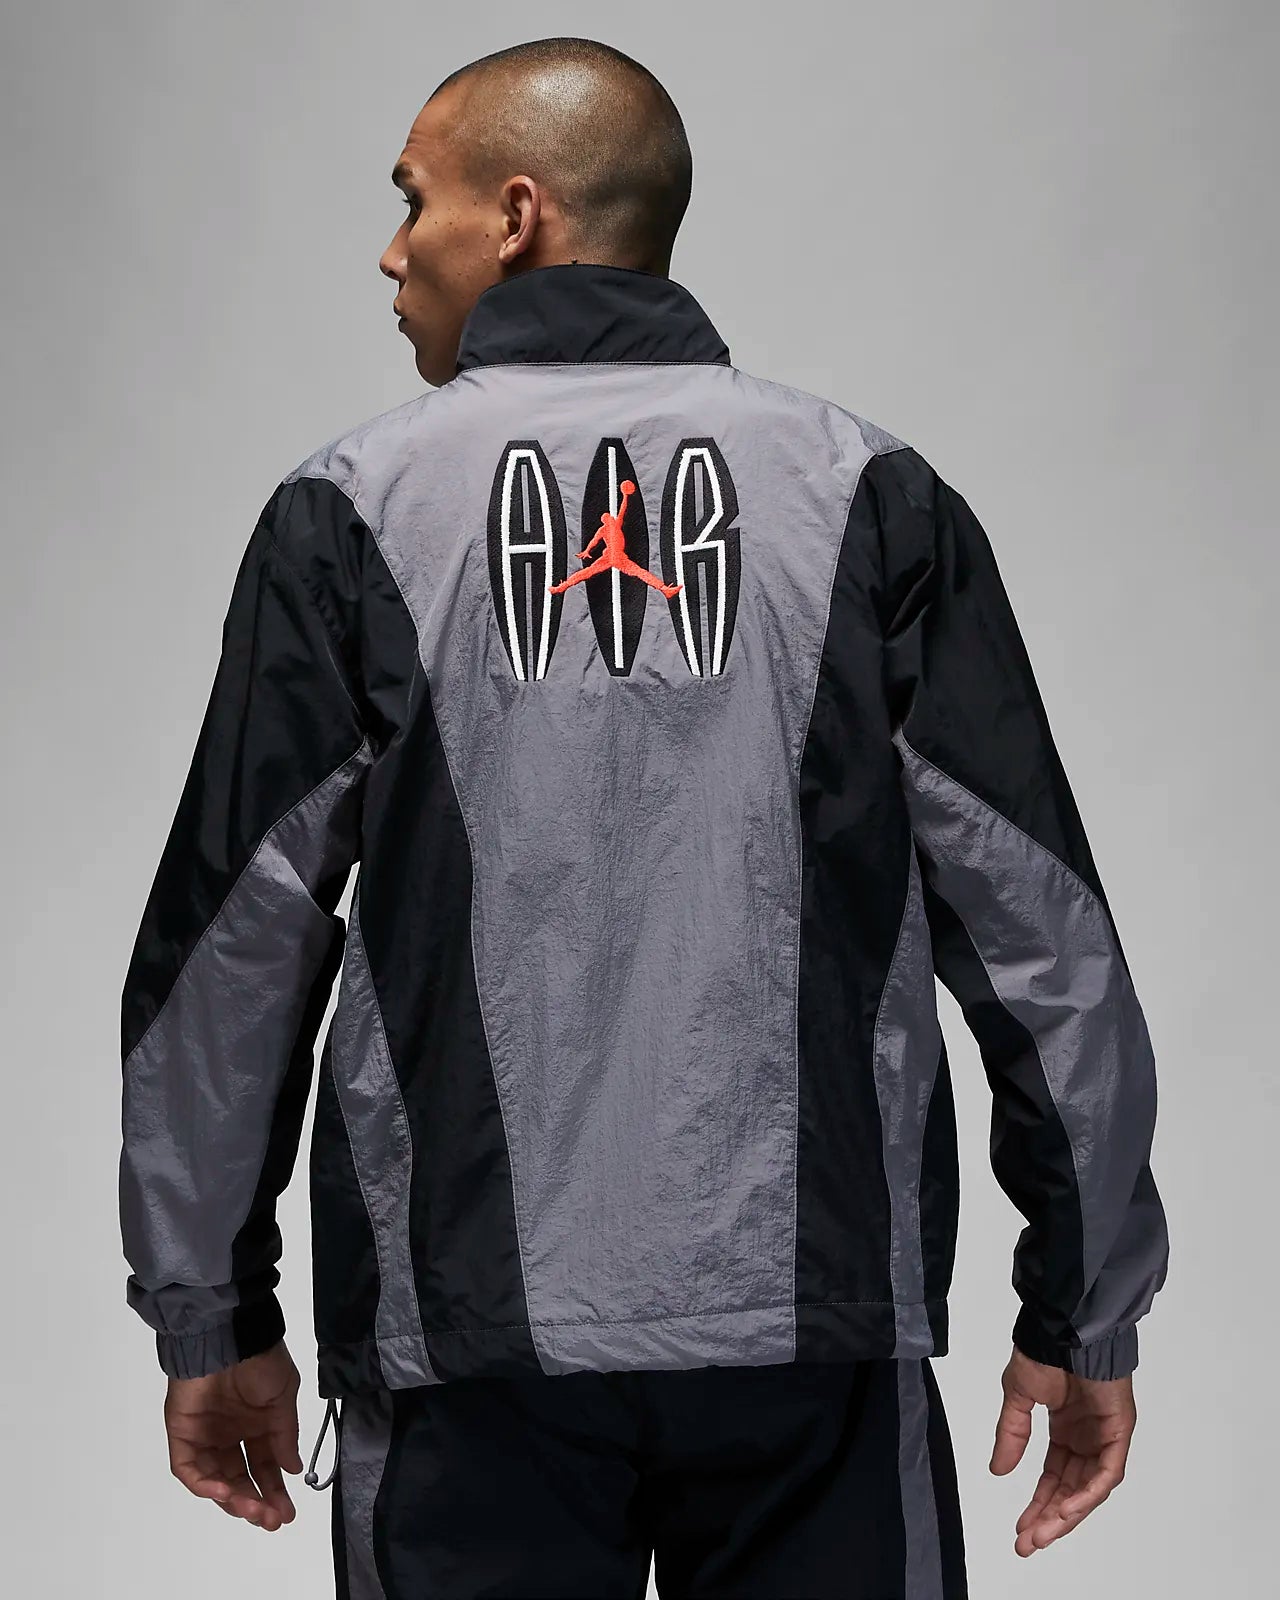 Buy Air Jordan x Travis Scott Woven Jacket 'Black' - DO4095 010 | GOAT